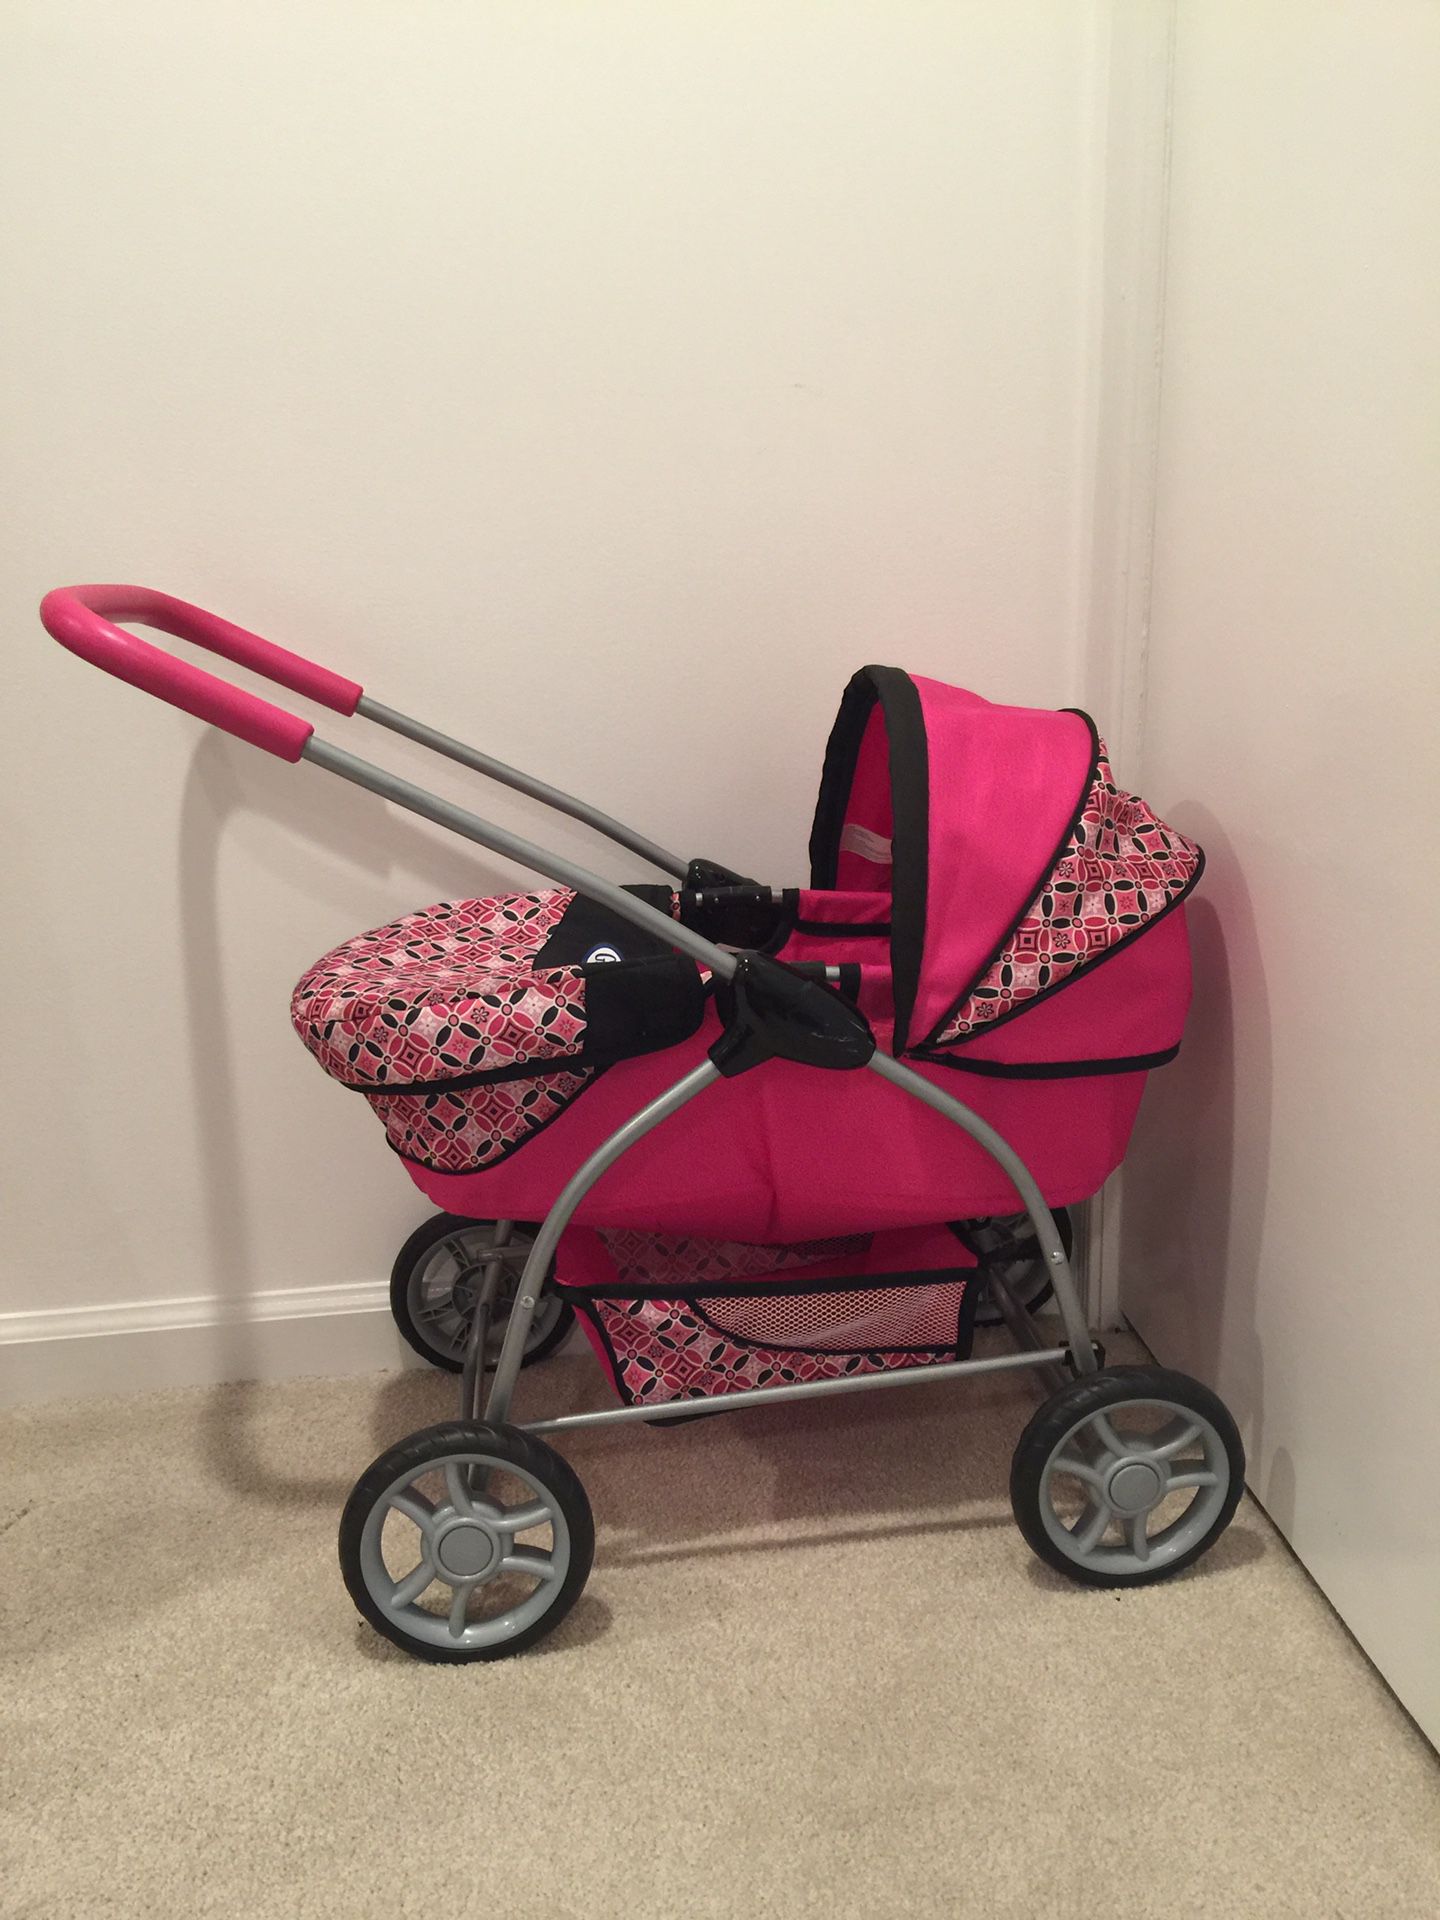 Graco Baby Doll Stroller- Seldom used